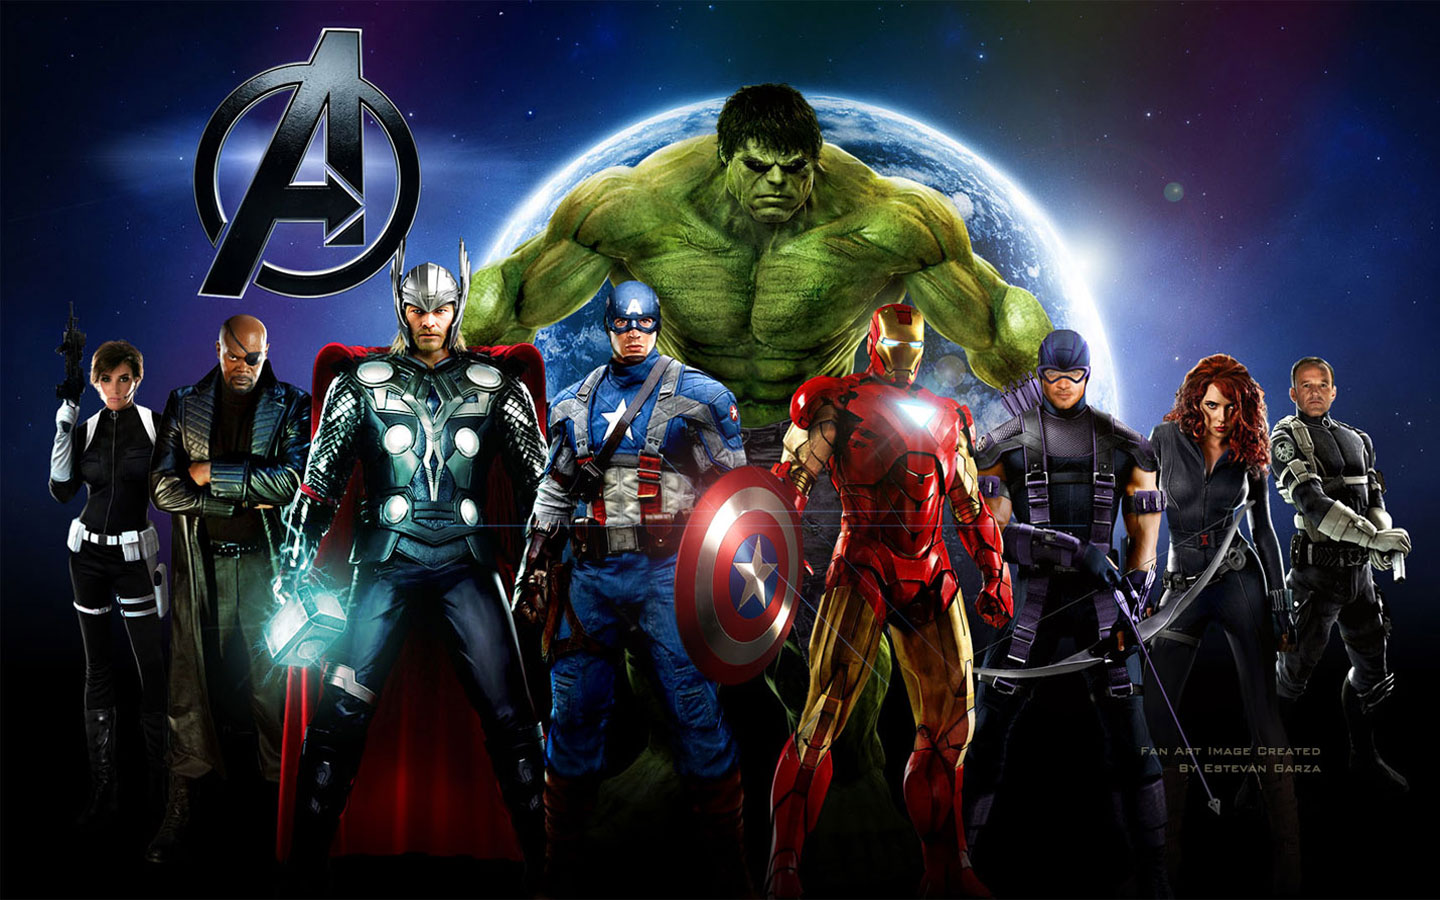 50+] The Avengers Wallpaper HD - WallpaperSafari